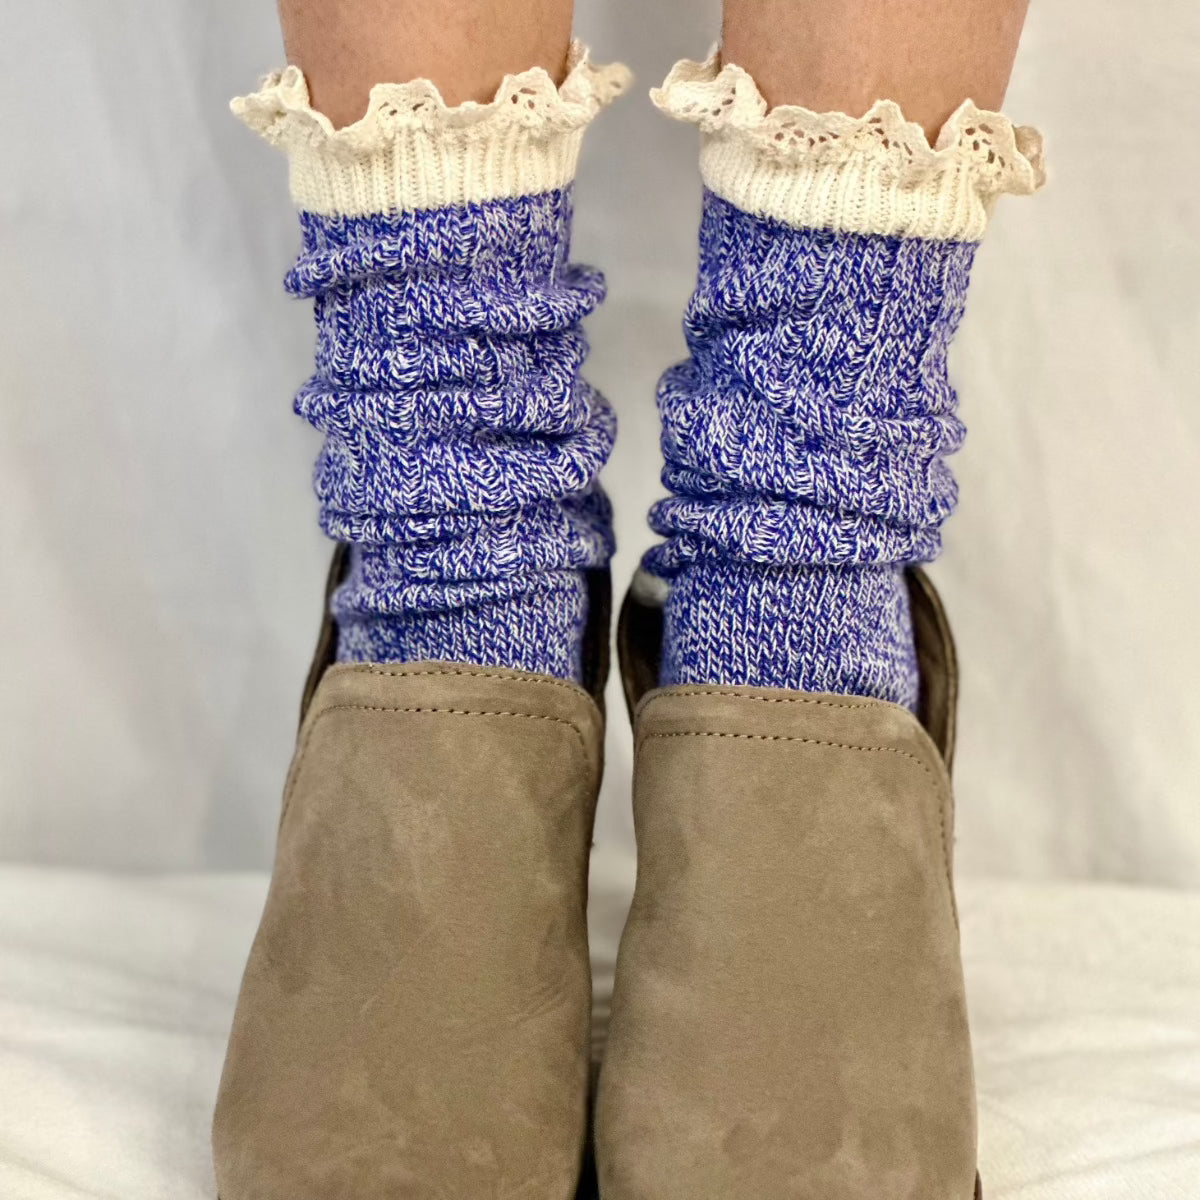 purple Eco friendly ankle socks womens, best quality ladies lace socks made USA